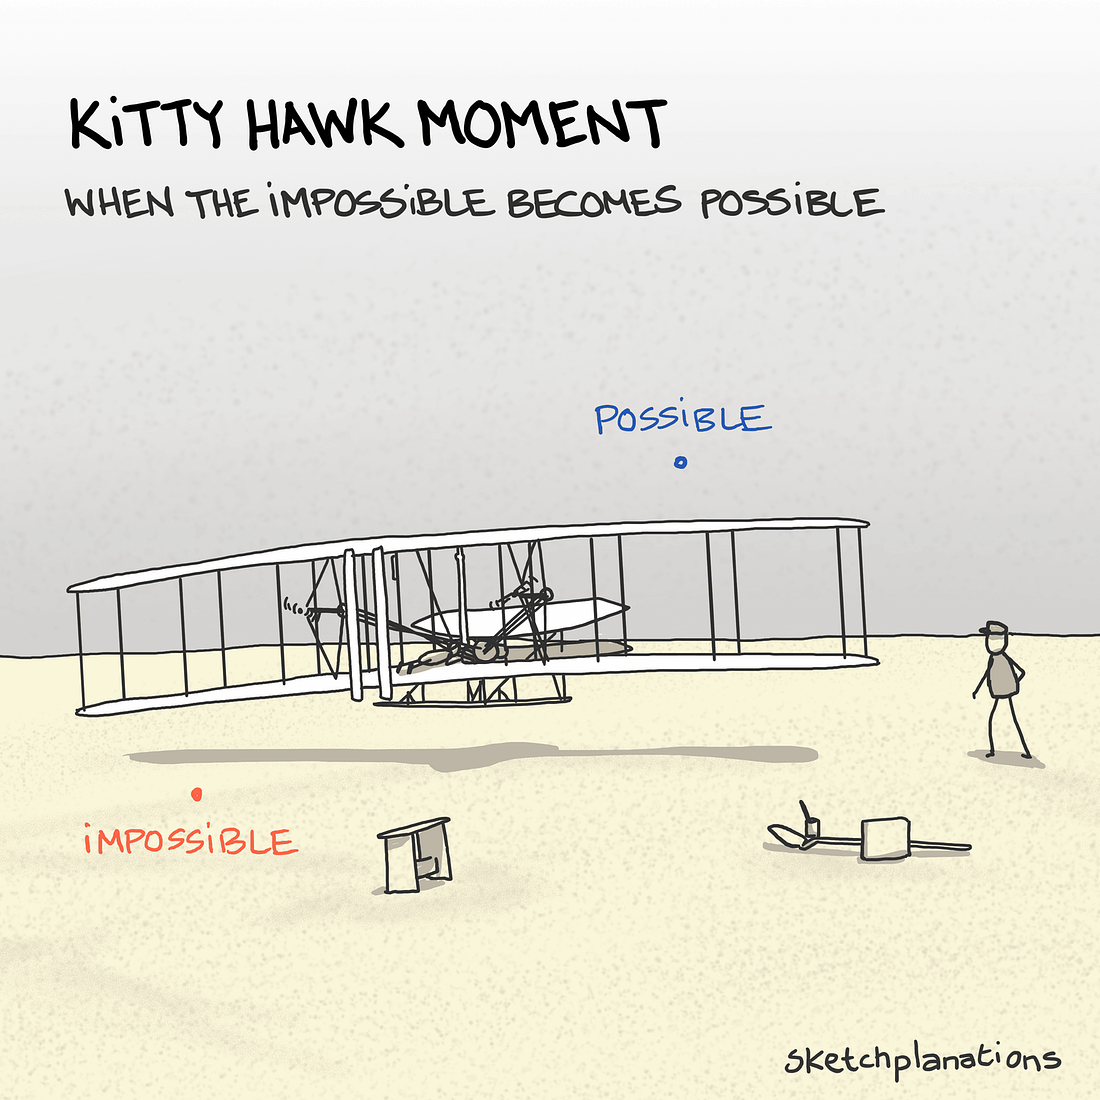 Kitty Hawk moment - Sketchplanations